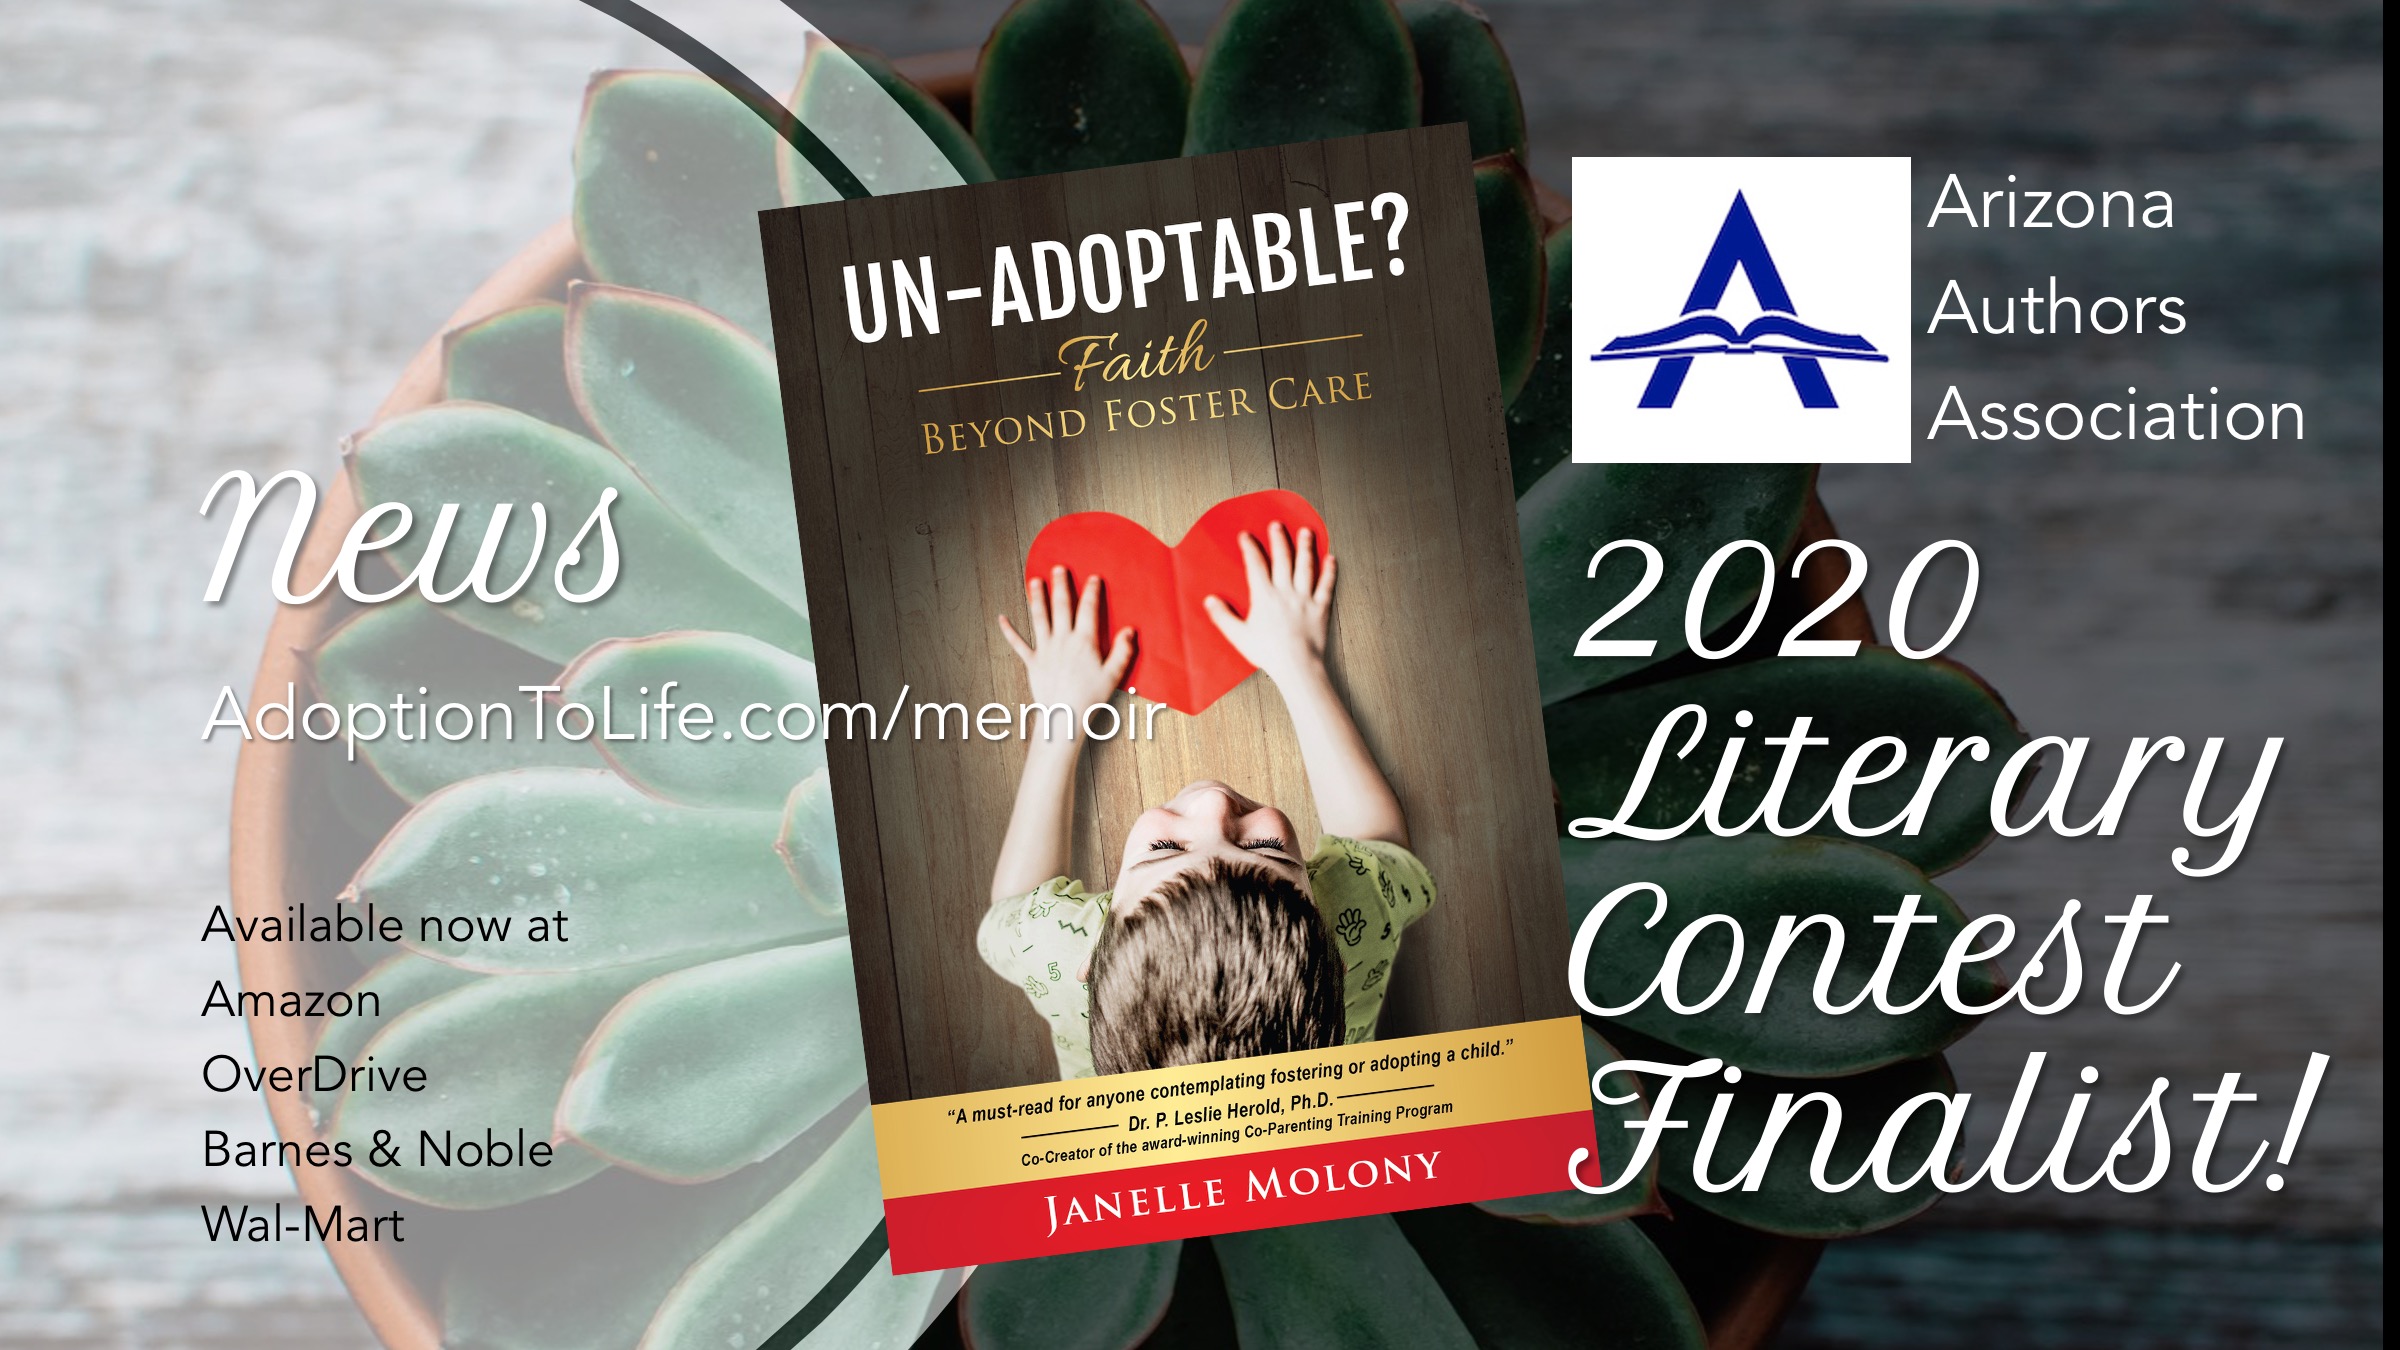 Foster Care Memoir a Finalist in Arizona Authors 2020 Lit. Contest!